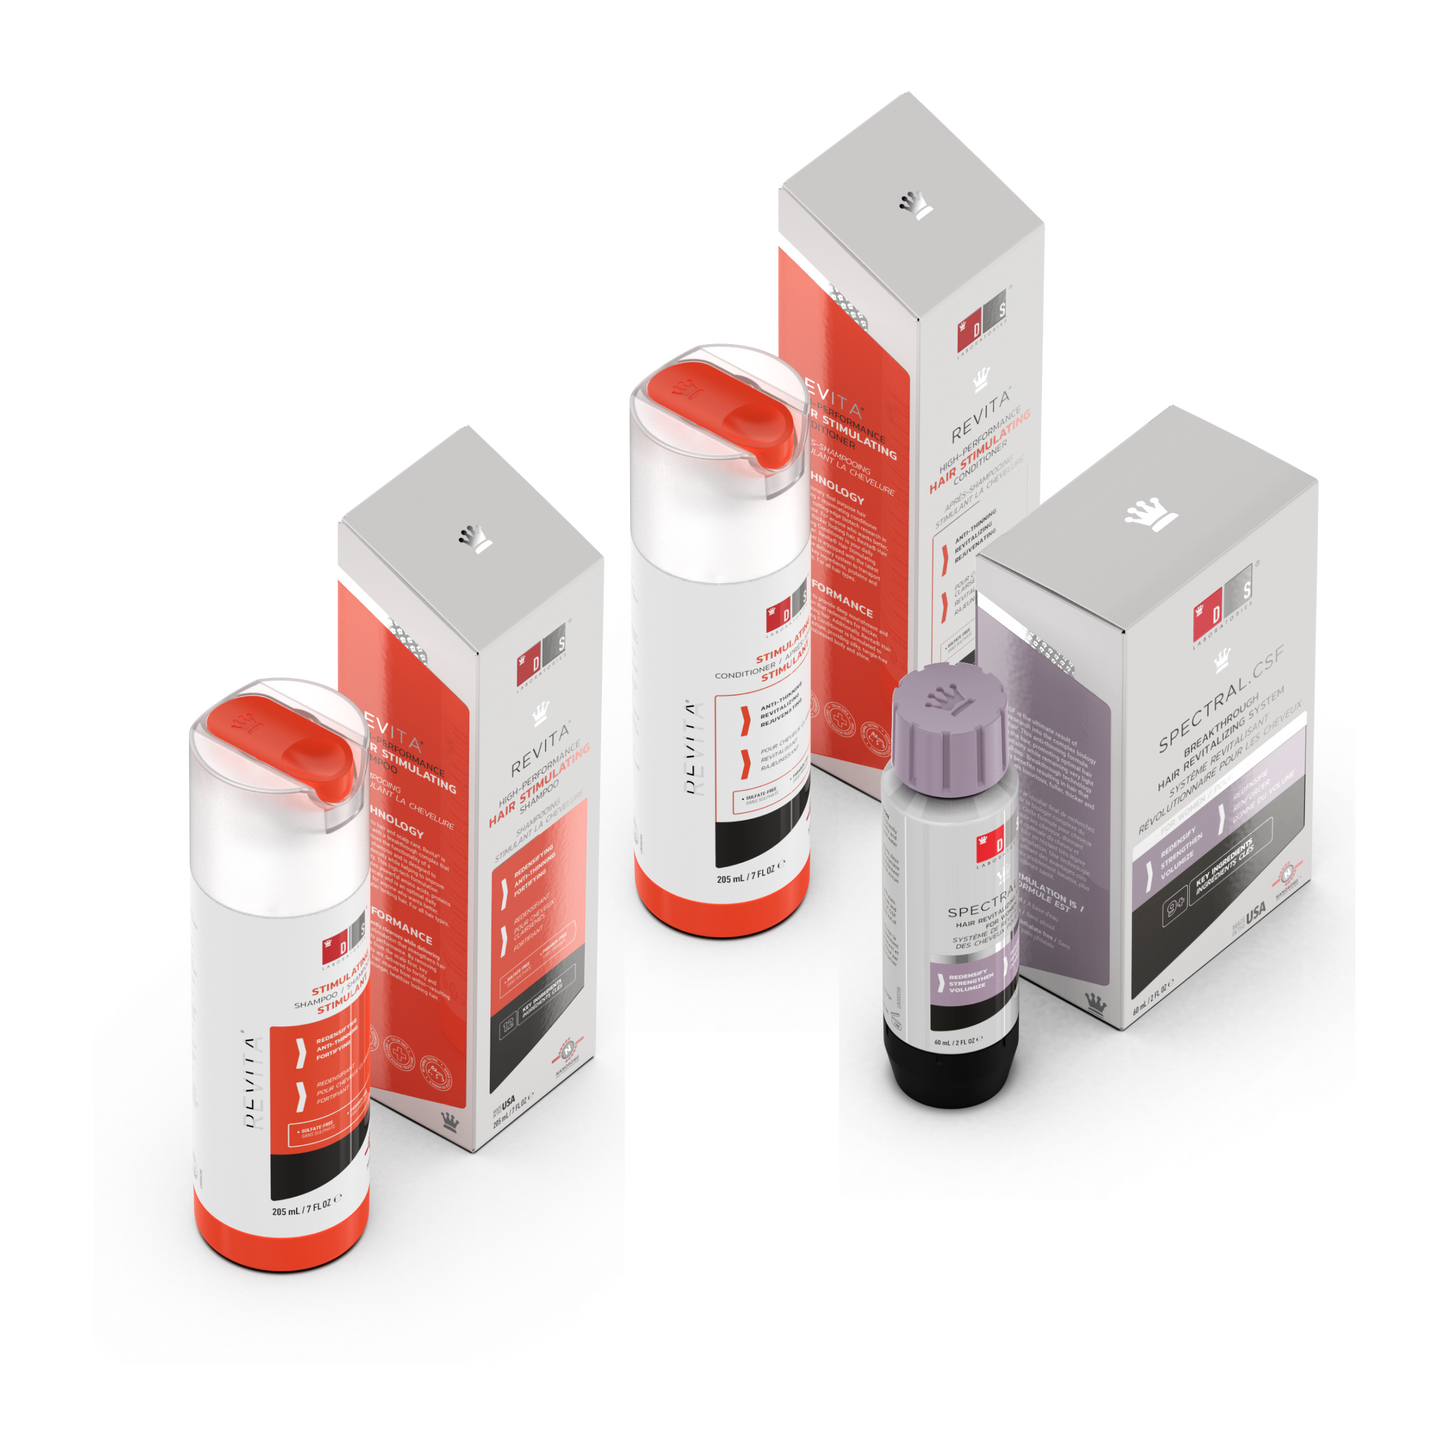 Kit| Revita Shampoo/Acondicionador + SPECTRAL.CSF